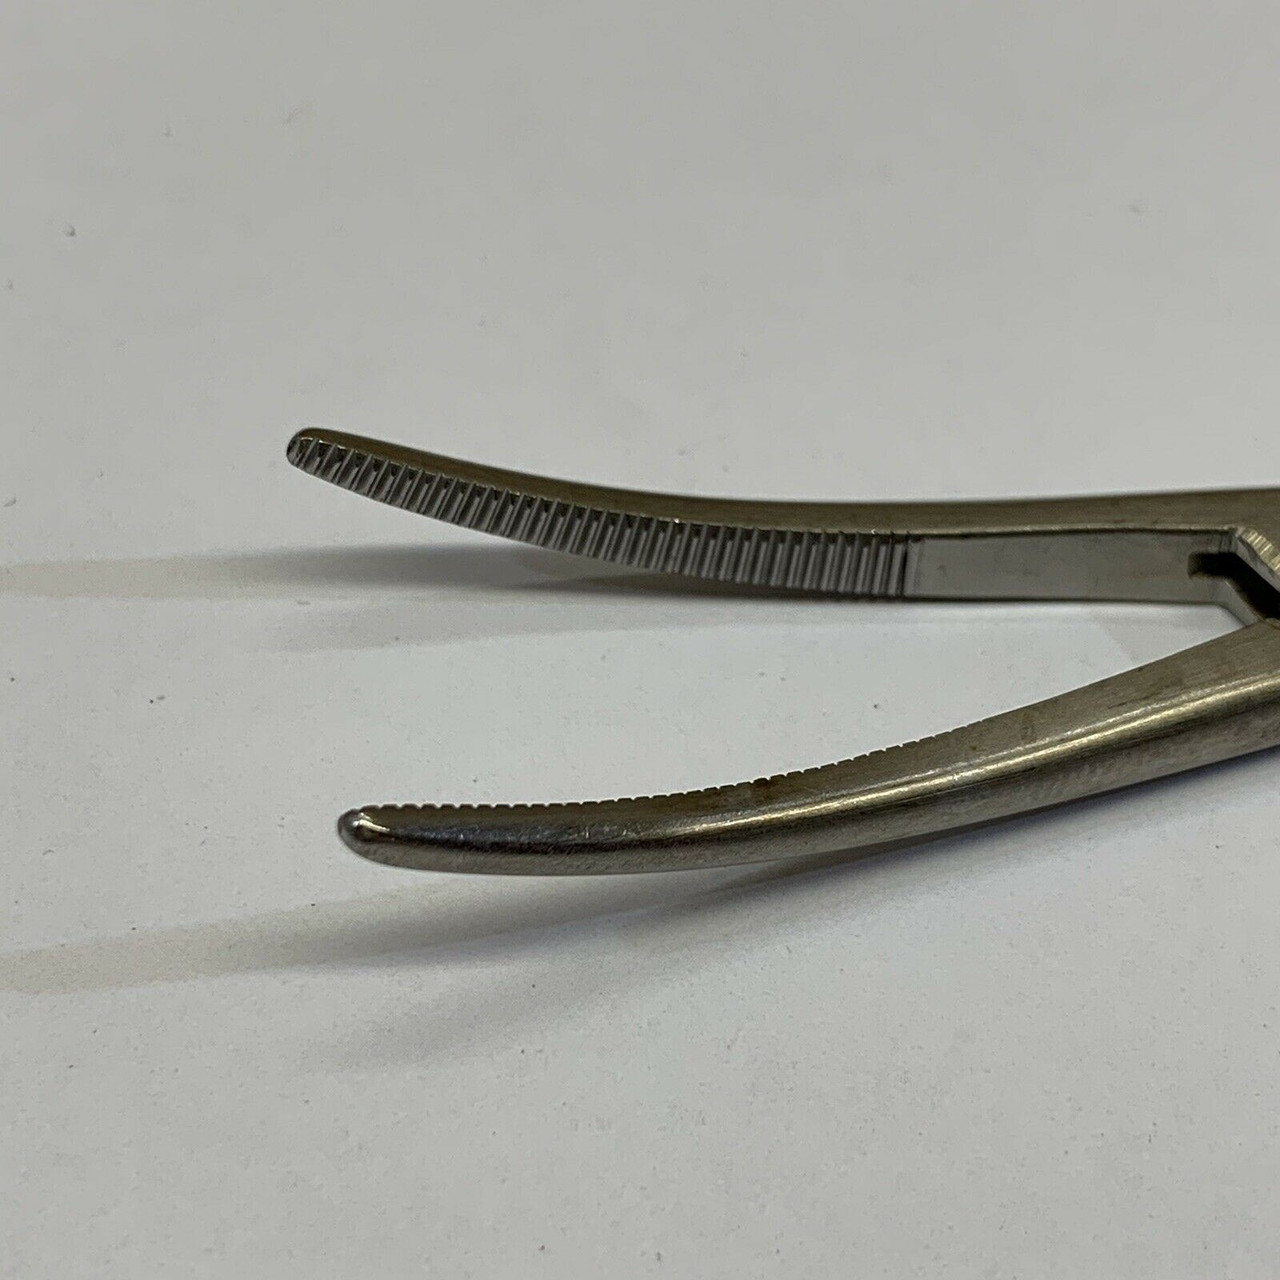 Rankin Hemostatic Forceps 17-1362 Sklar Instruments 6.25" Length Curved